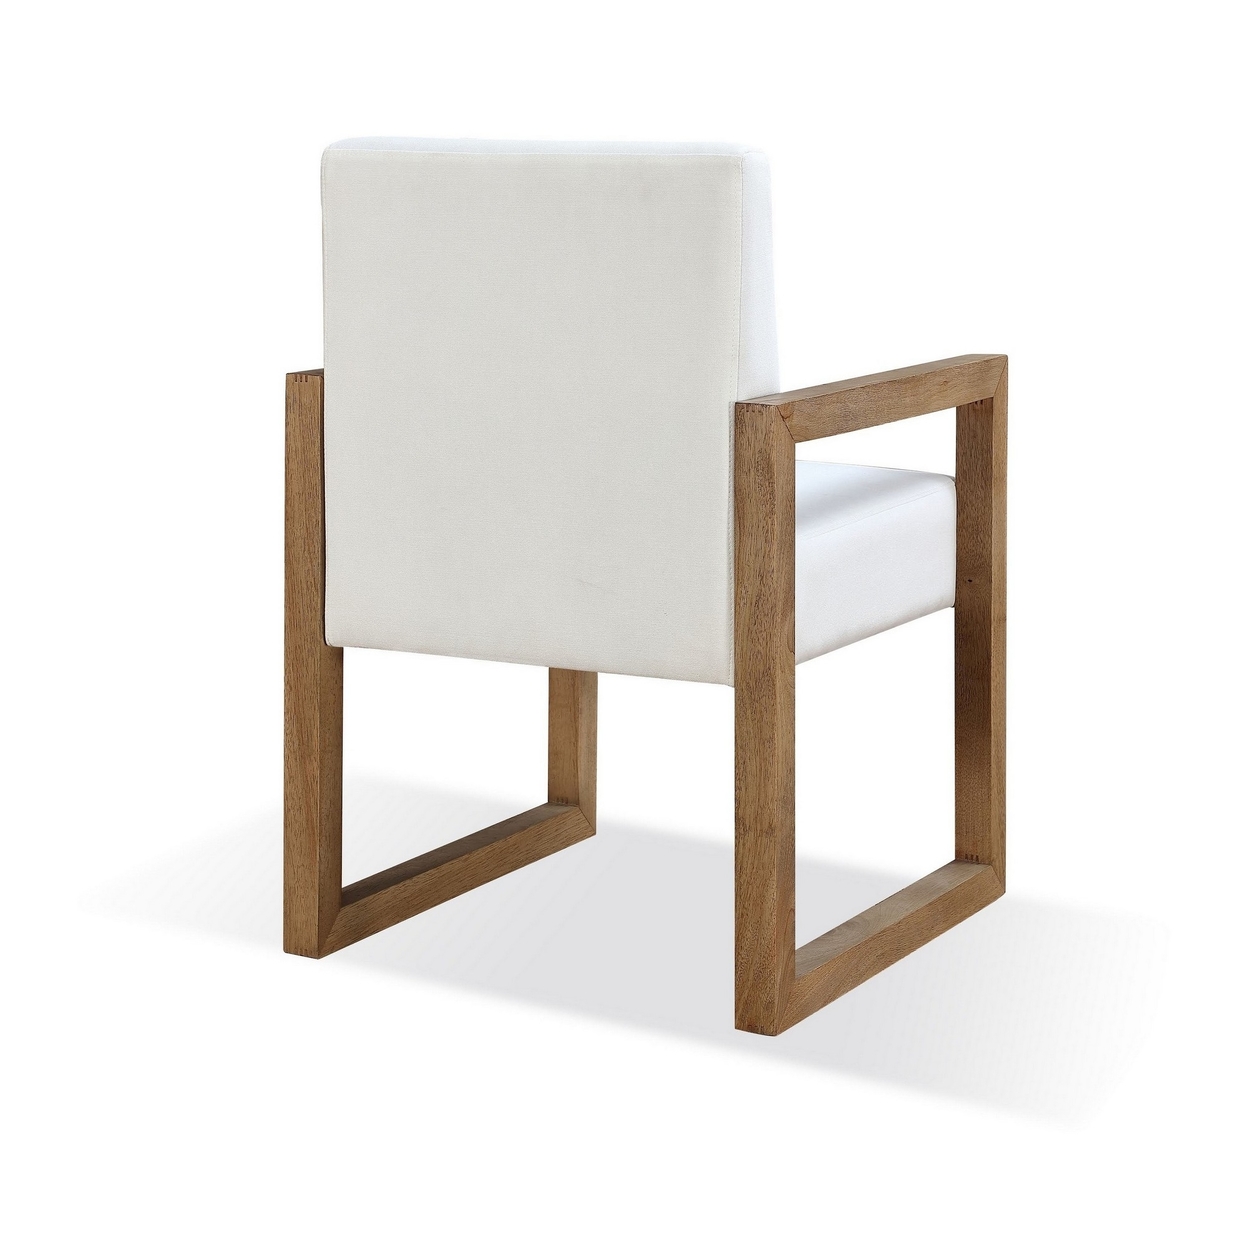 Rux 23 Inch Dining Chair, White Fabric Seat, Sled Legs, Brown Wood -Saltoro Sherpi